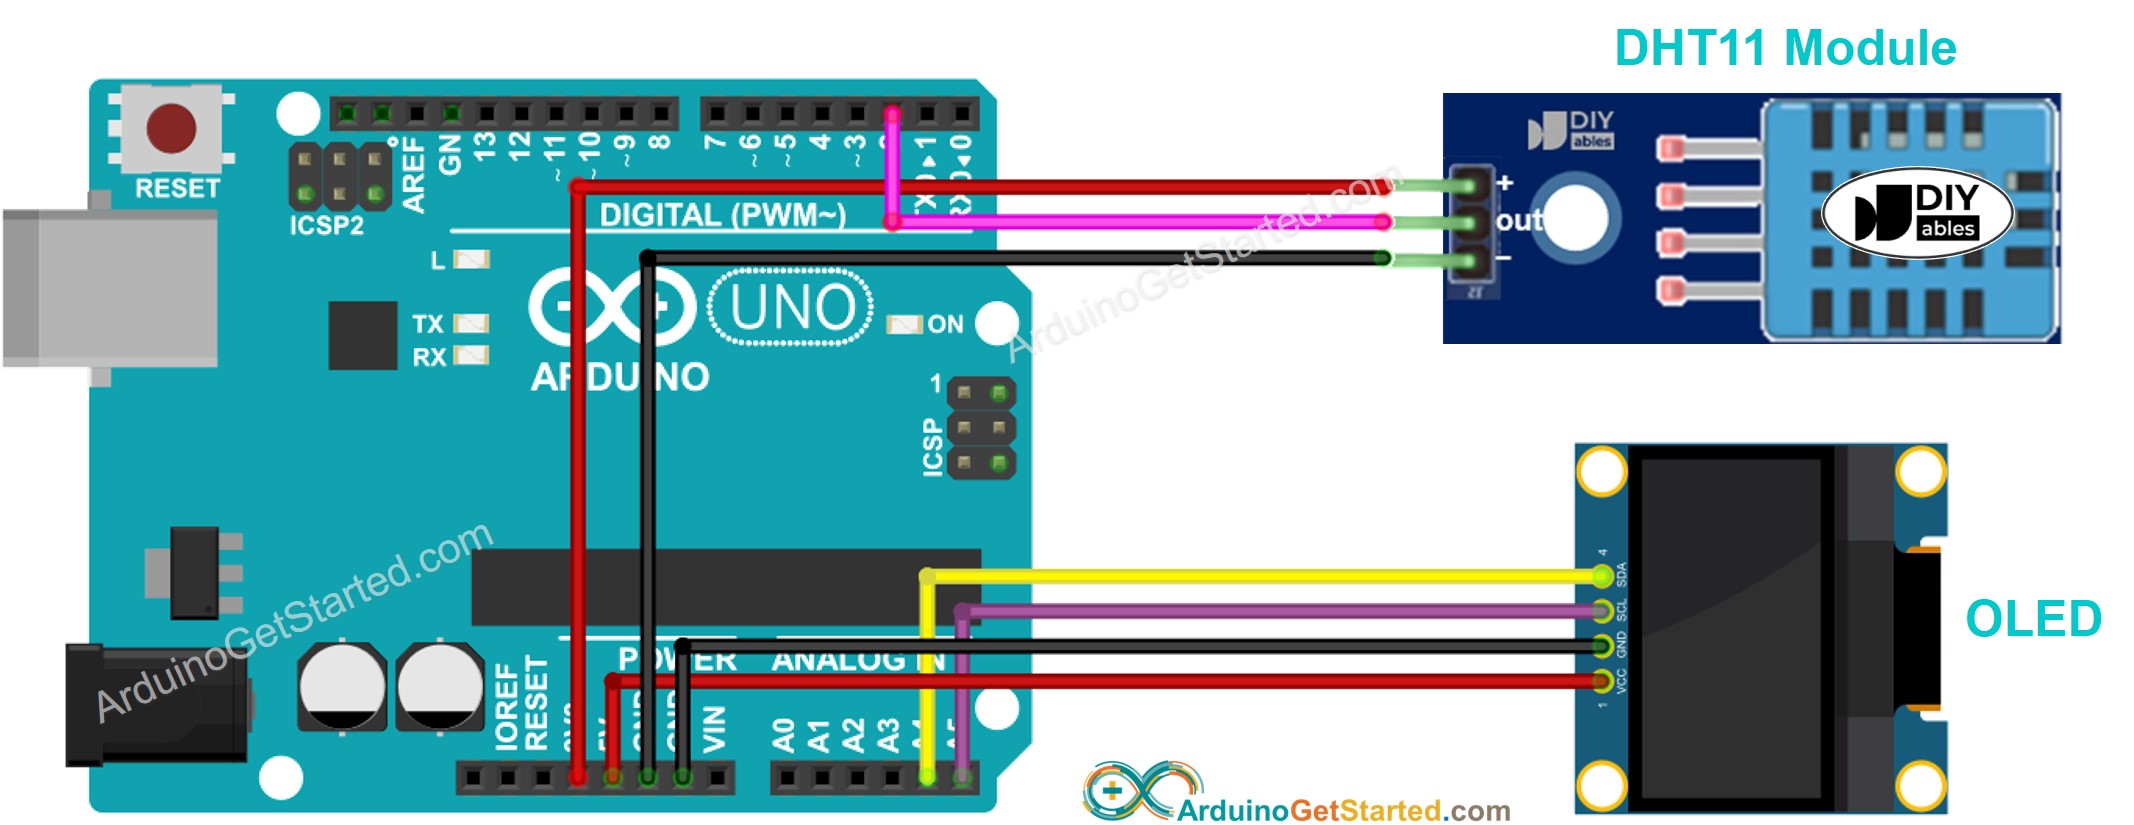 Arduino DHT11 Sensor OLED Wiring Diagram